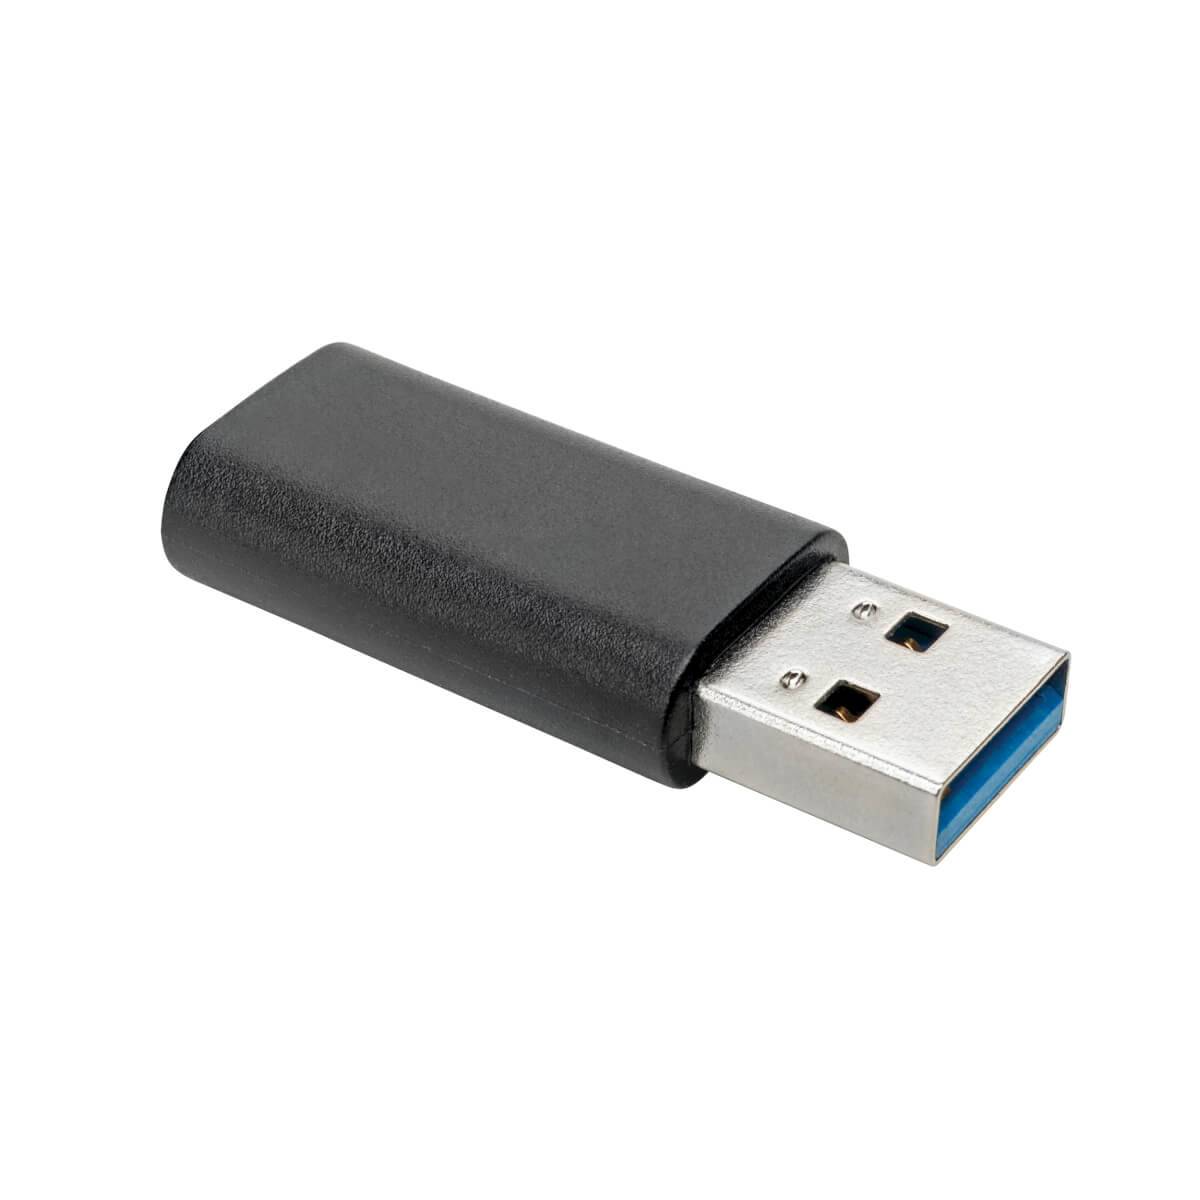 Rca Informatique - Image du produit : USB 3.0 ADAPTER USB-A TO USB TYPE-C USB-C M/F